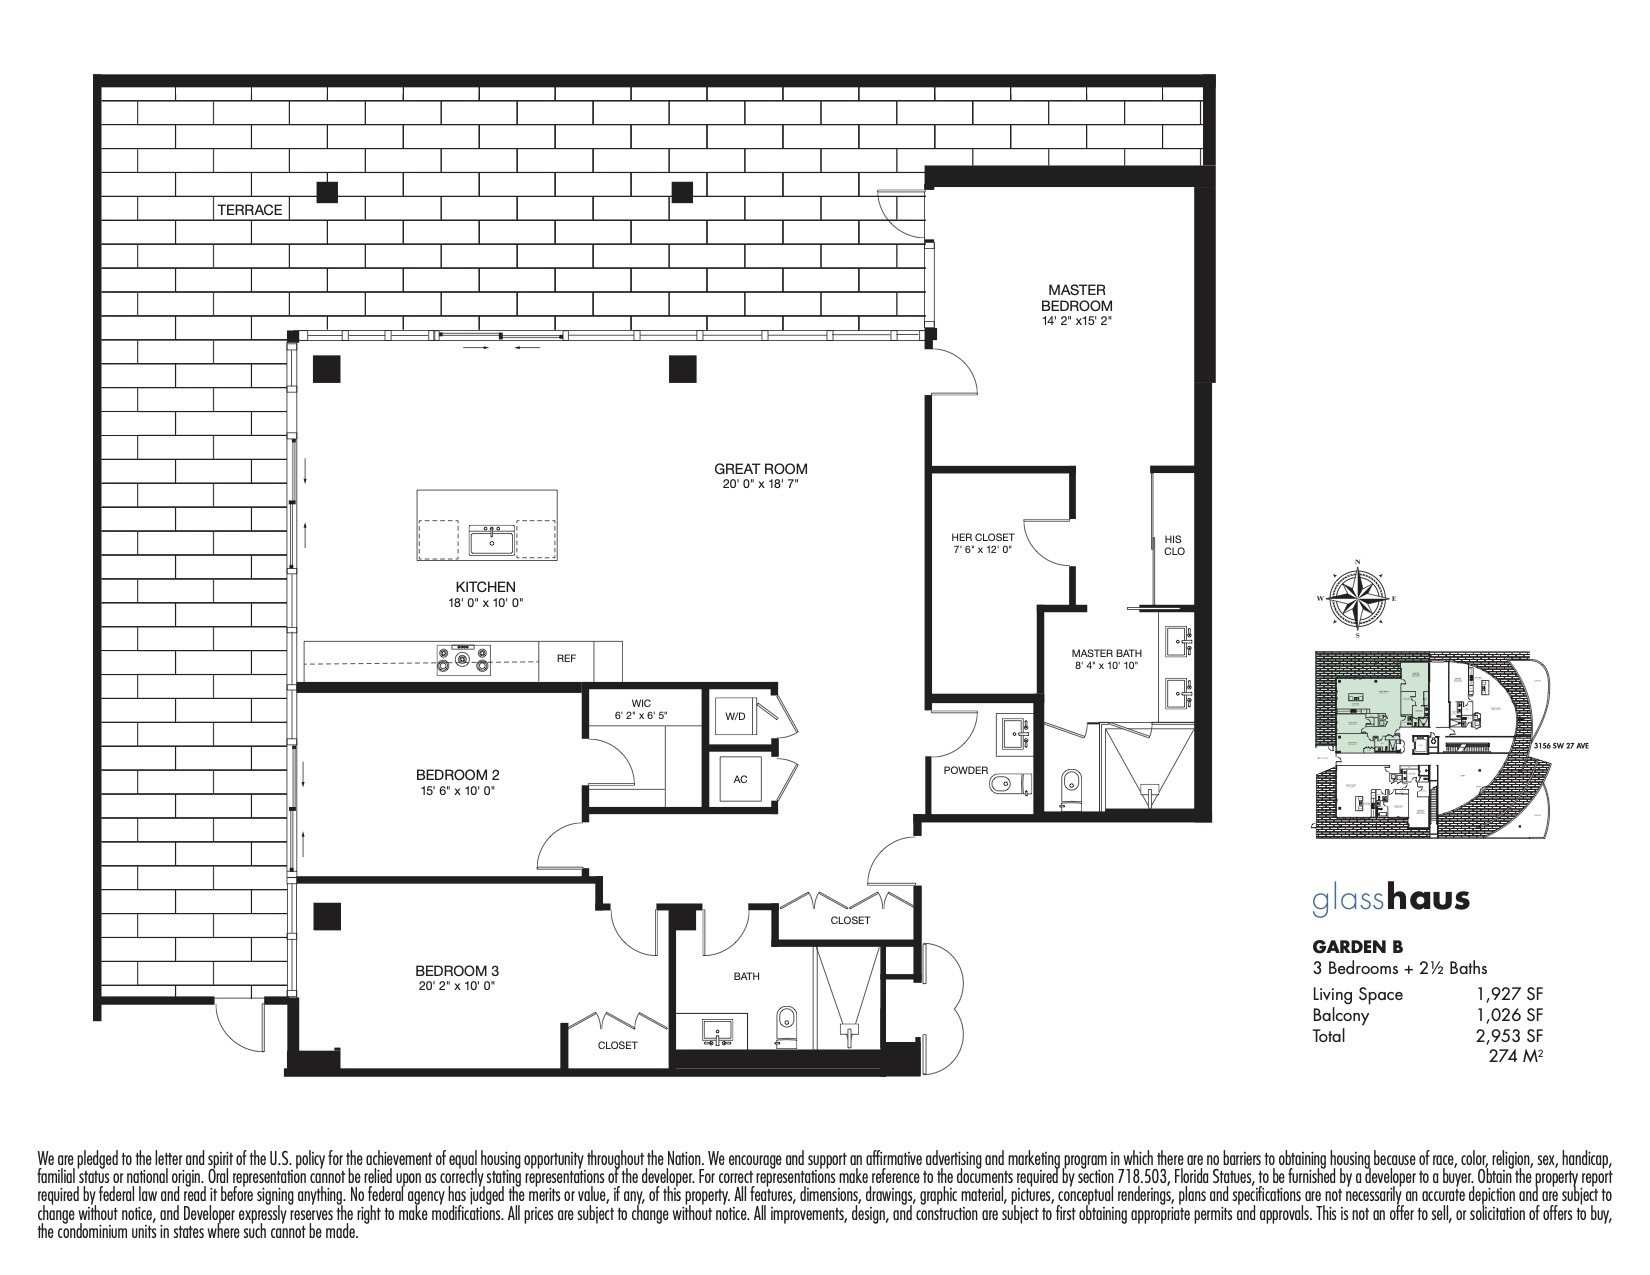 Floor Plan for GlassHaus Coconut Grove Floorplans, Garden B